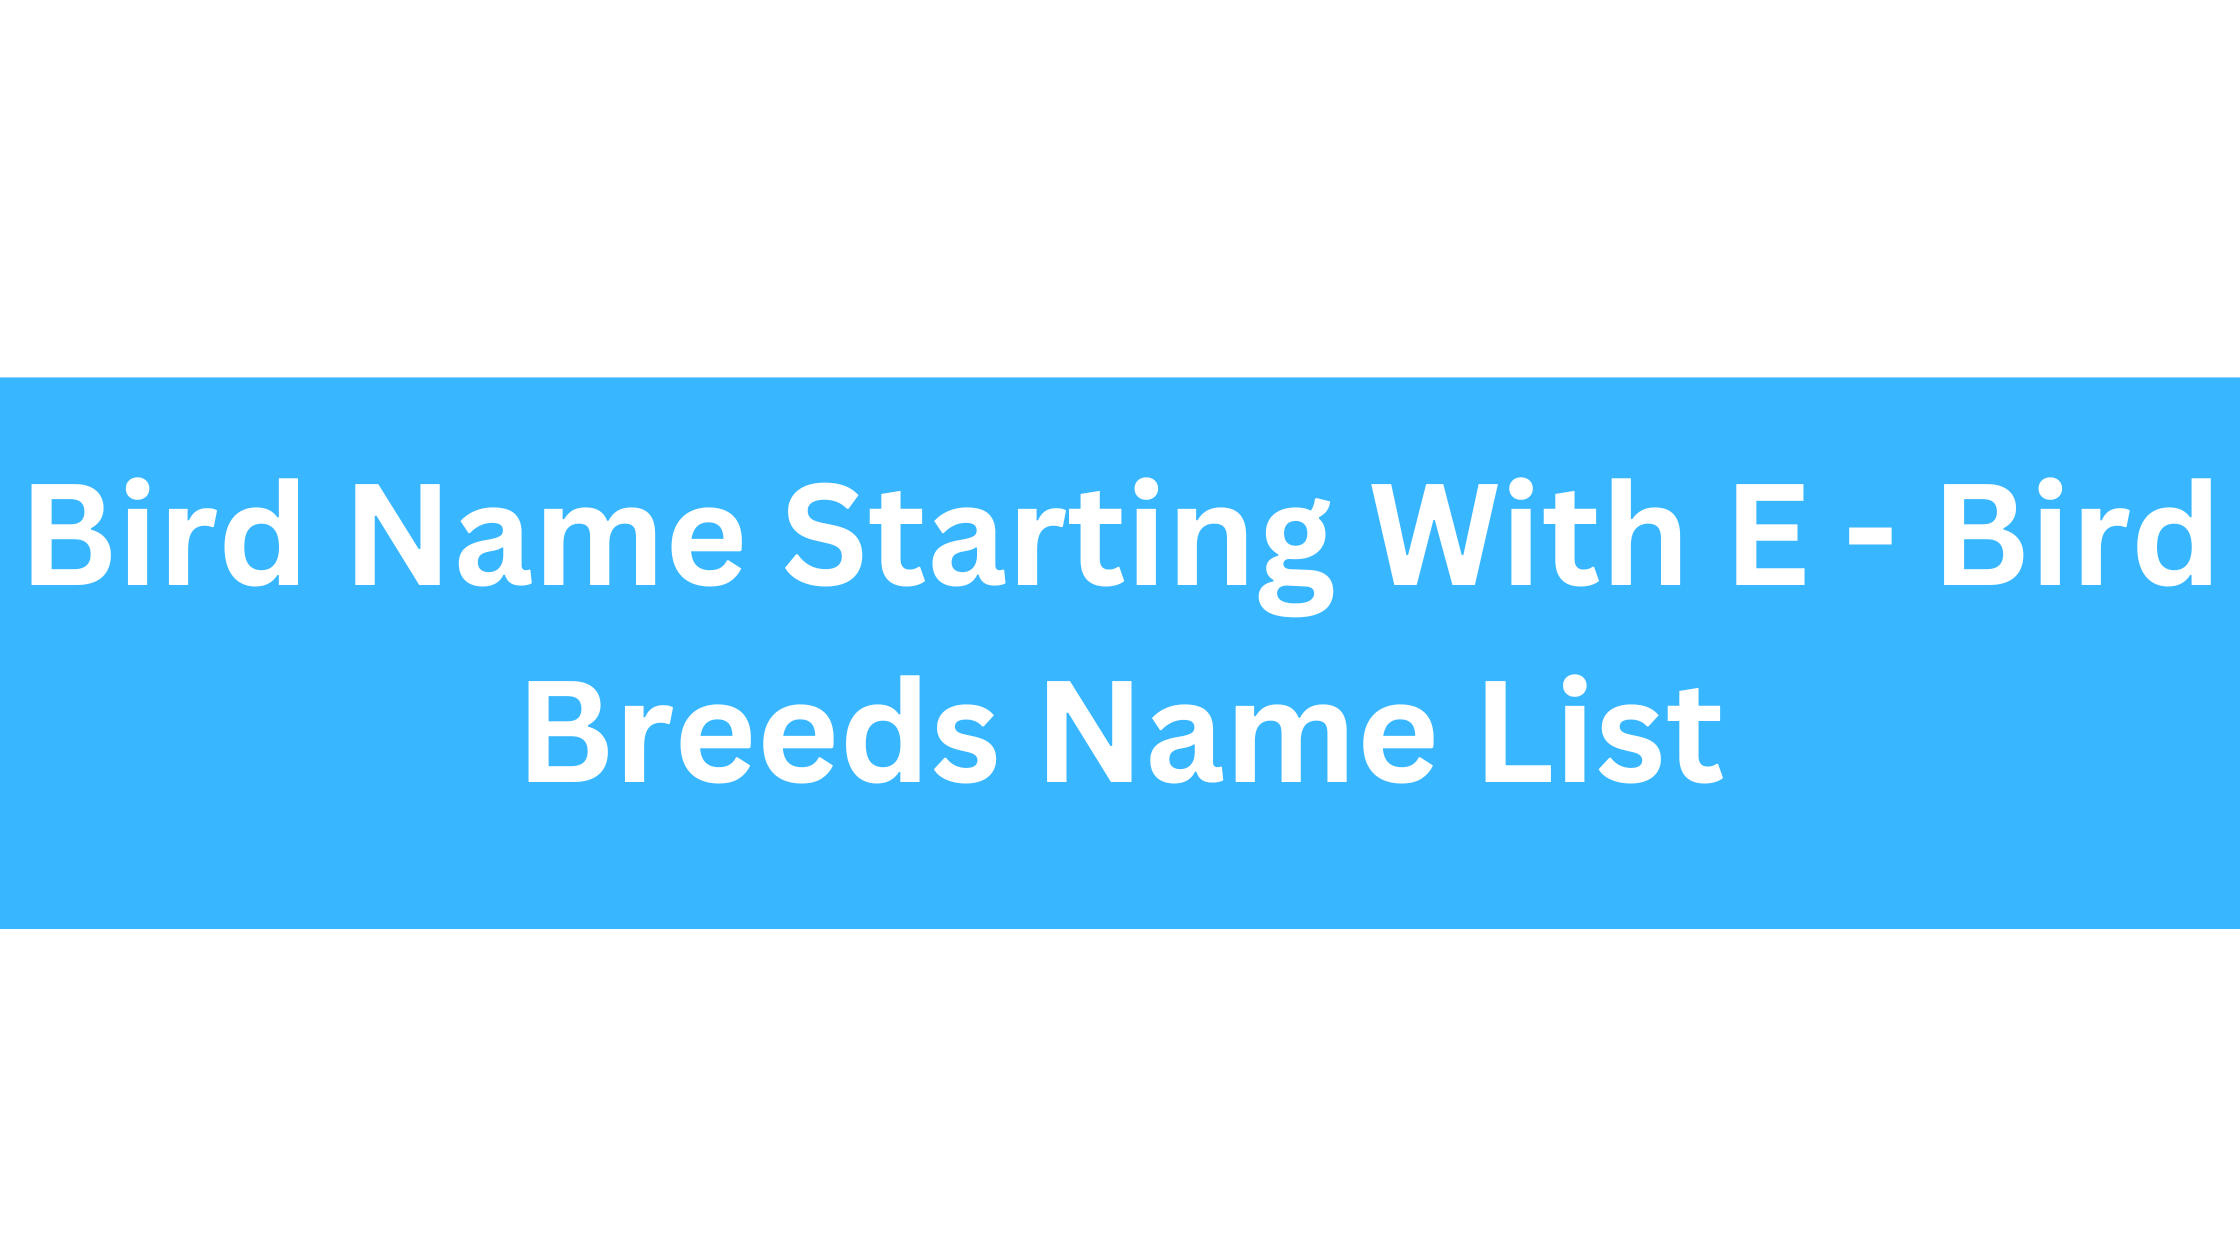 Bird Name Starting With E